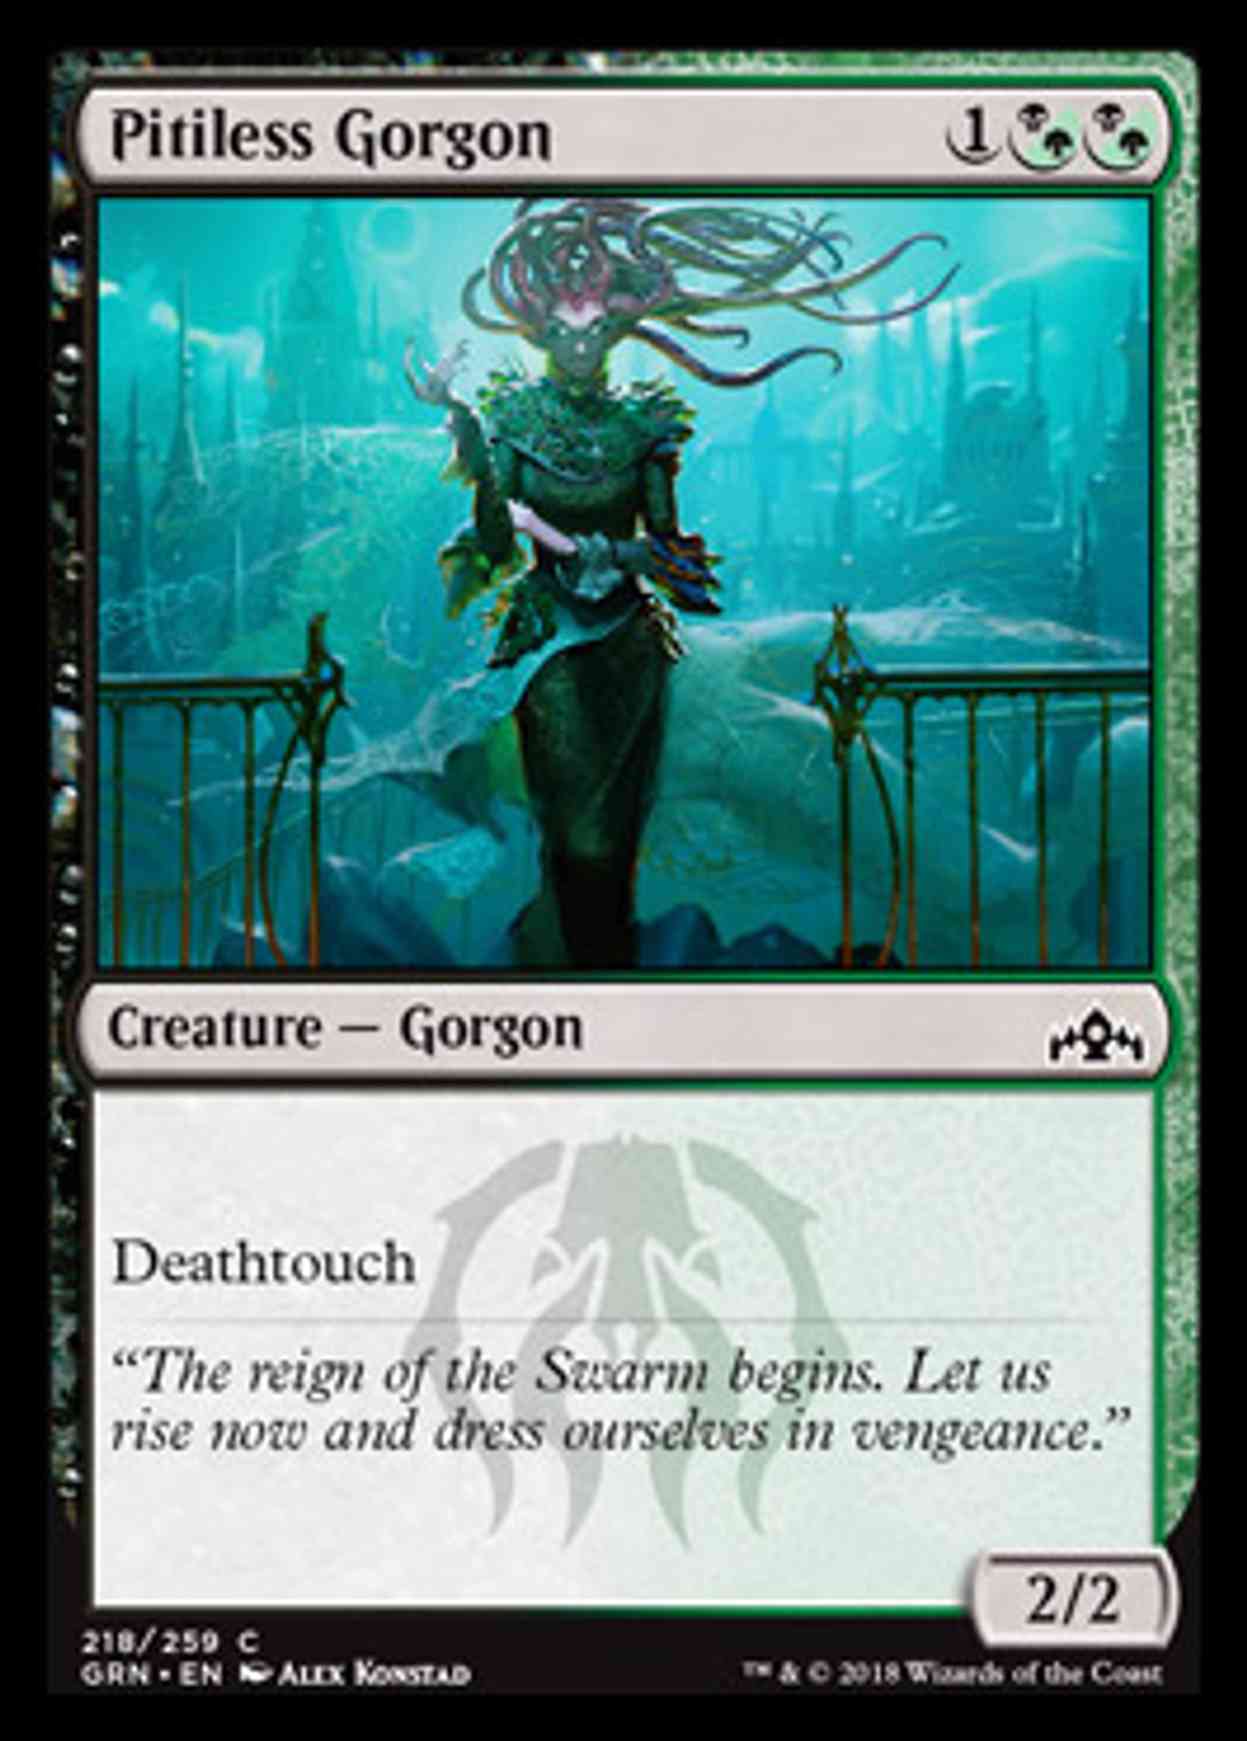 Pitiless Gorgon magic card front